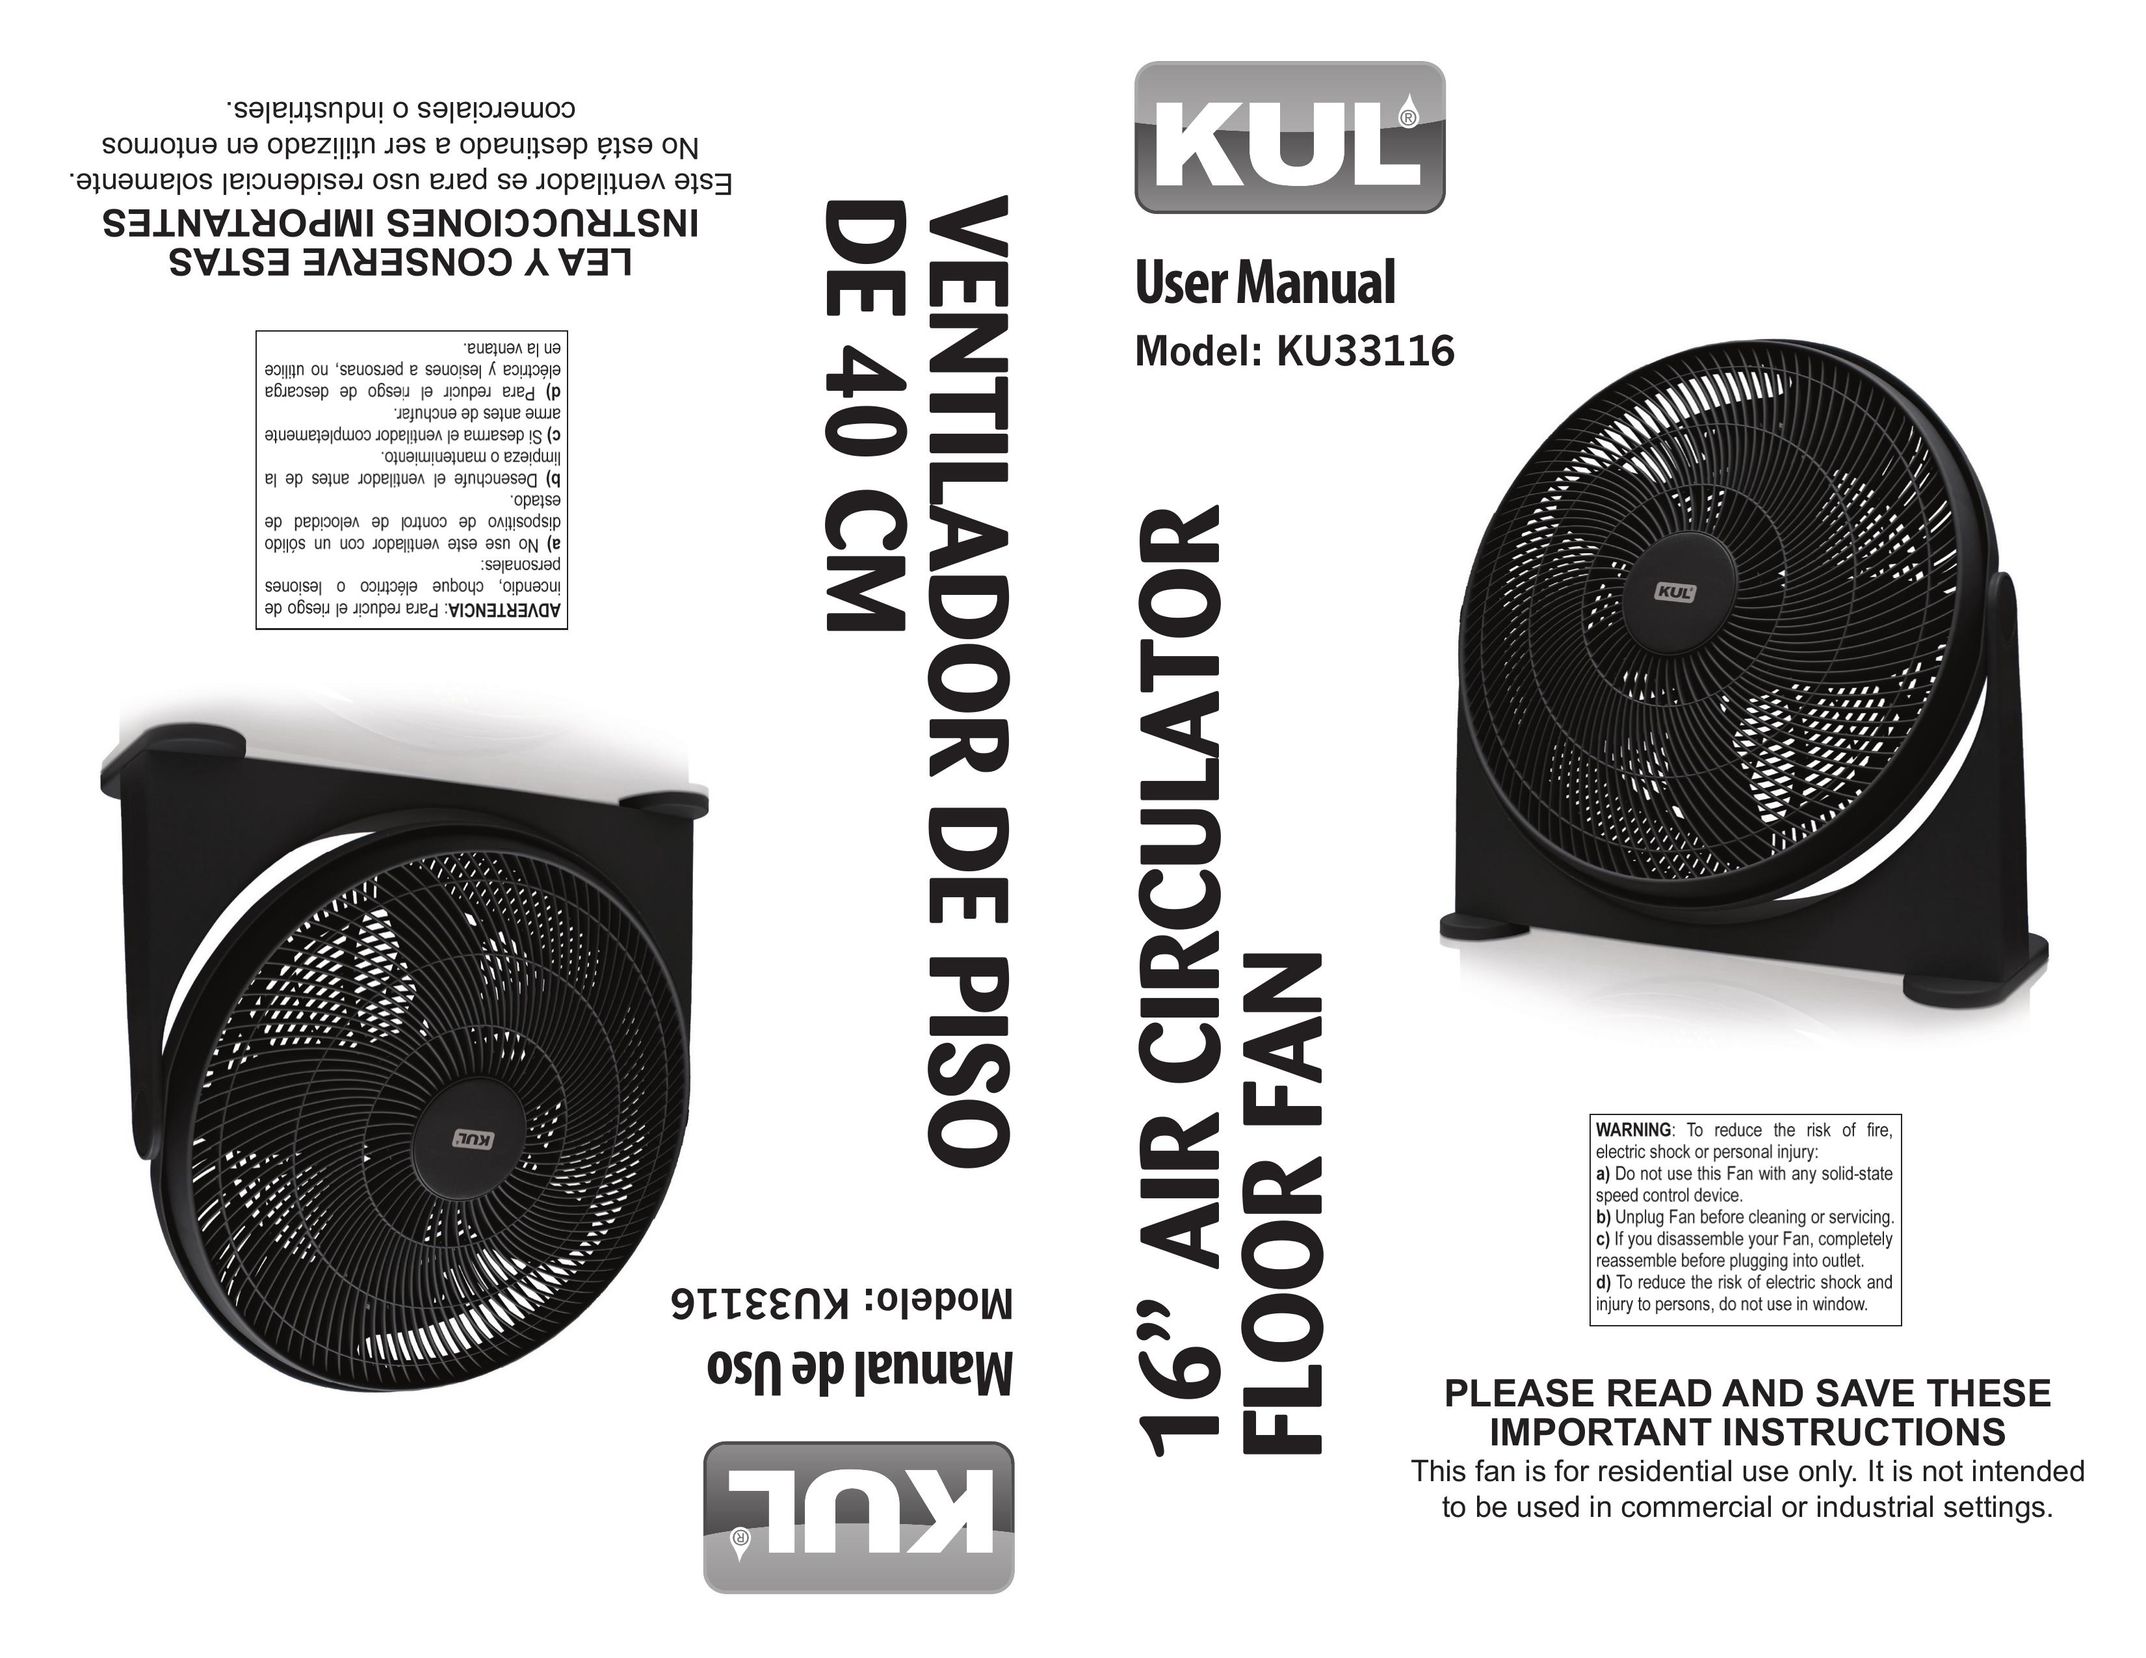 Continental Electric KU33116 Fan User Manual